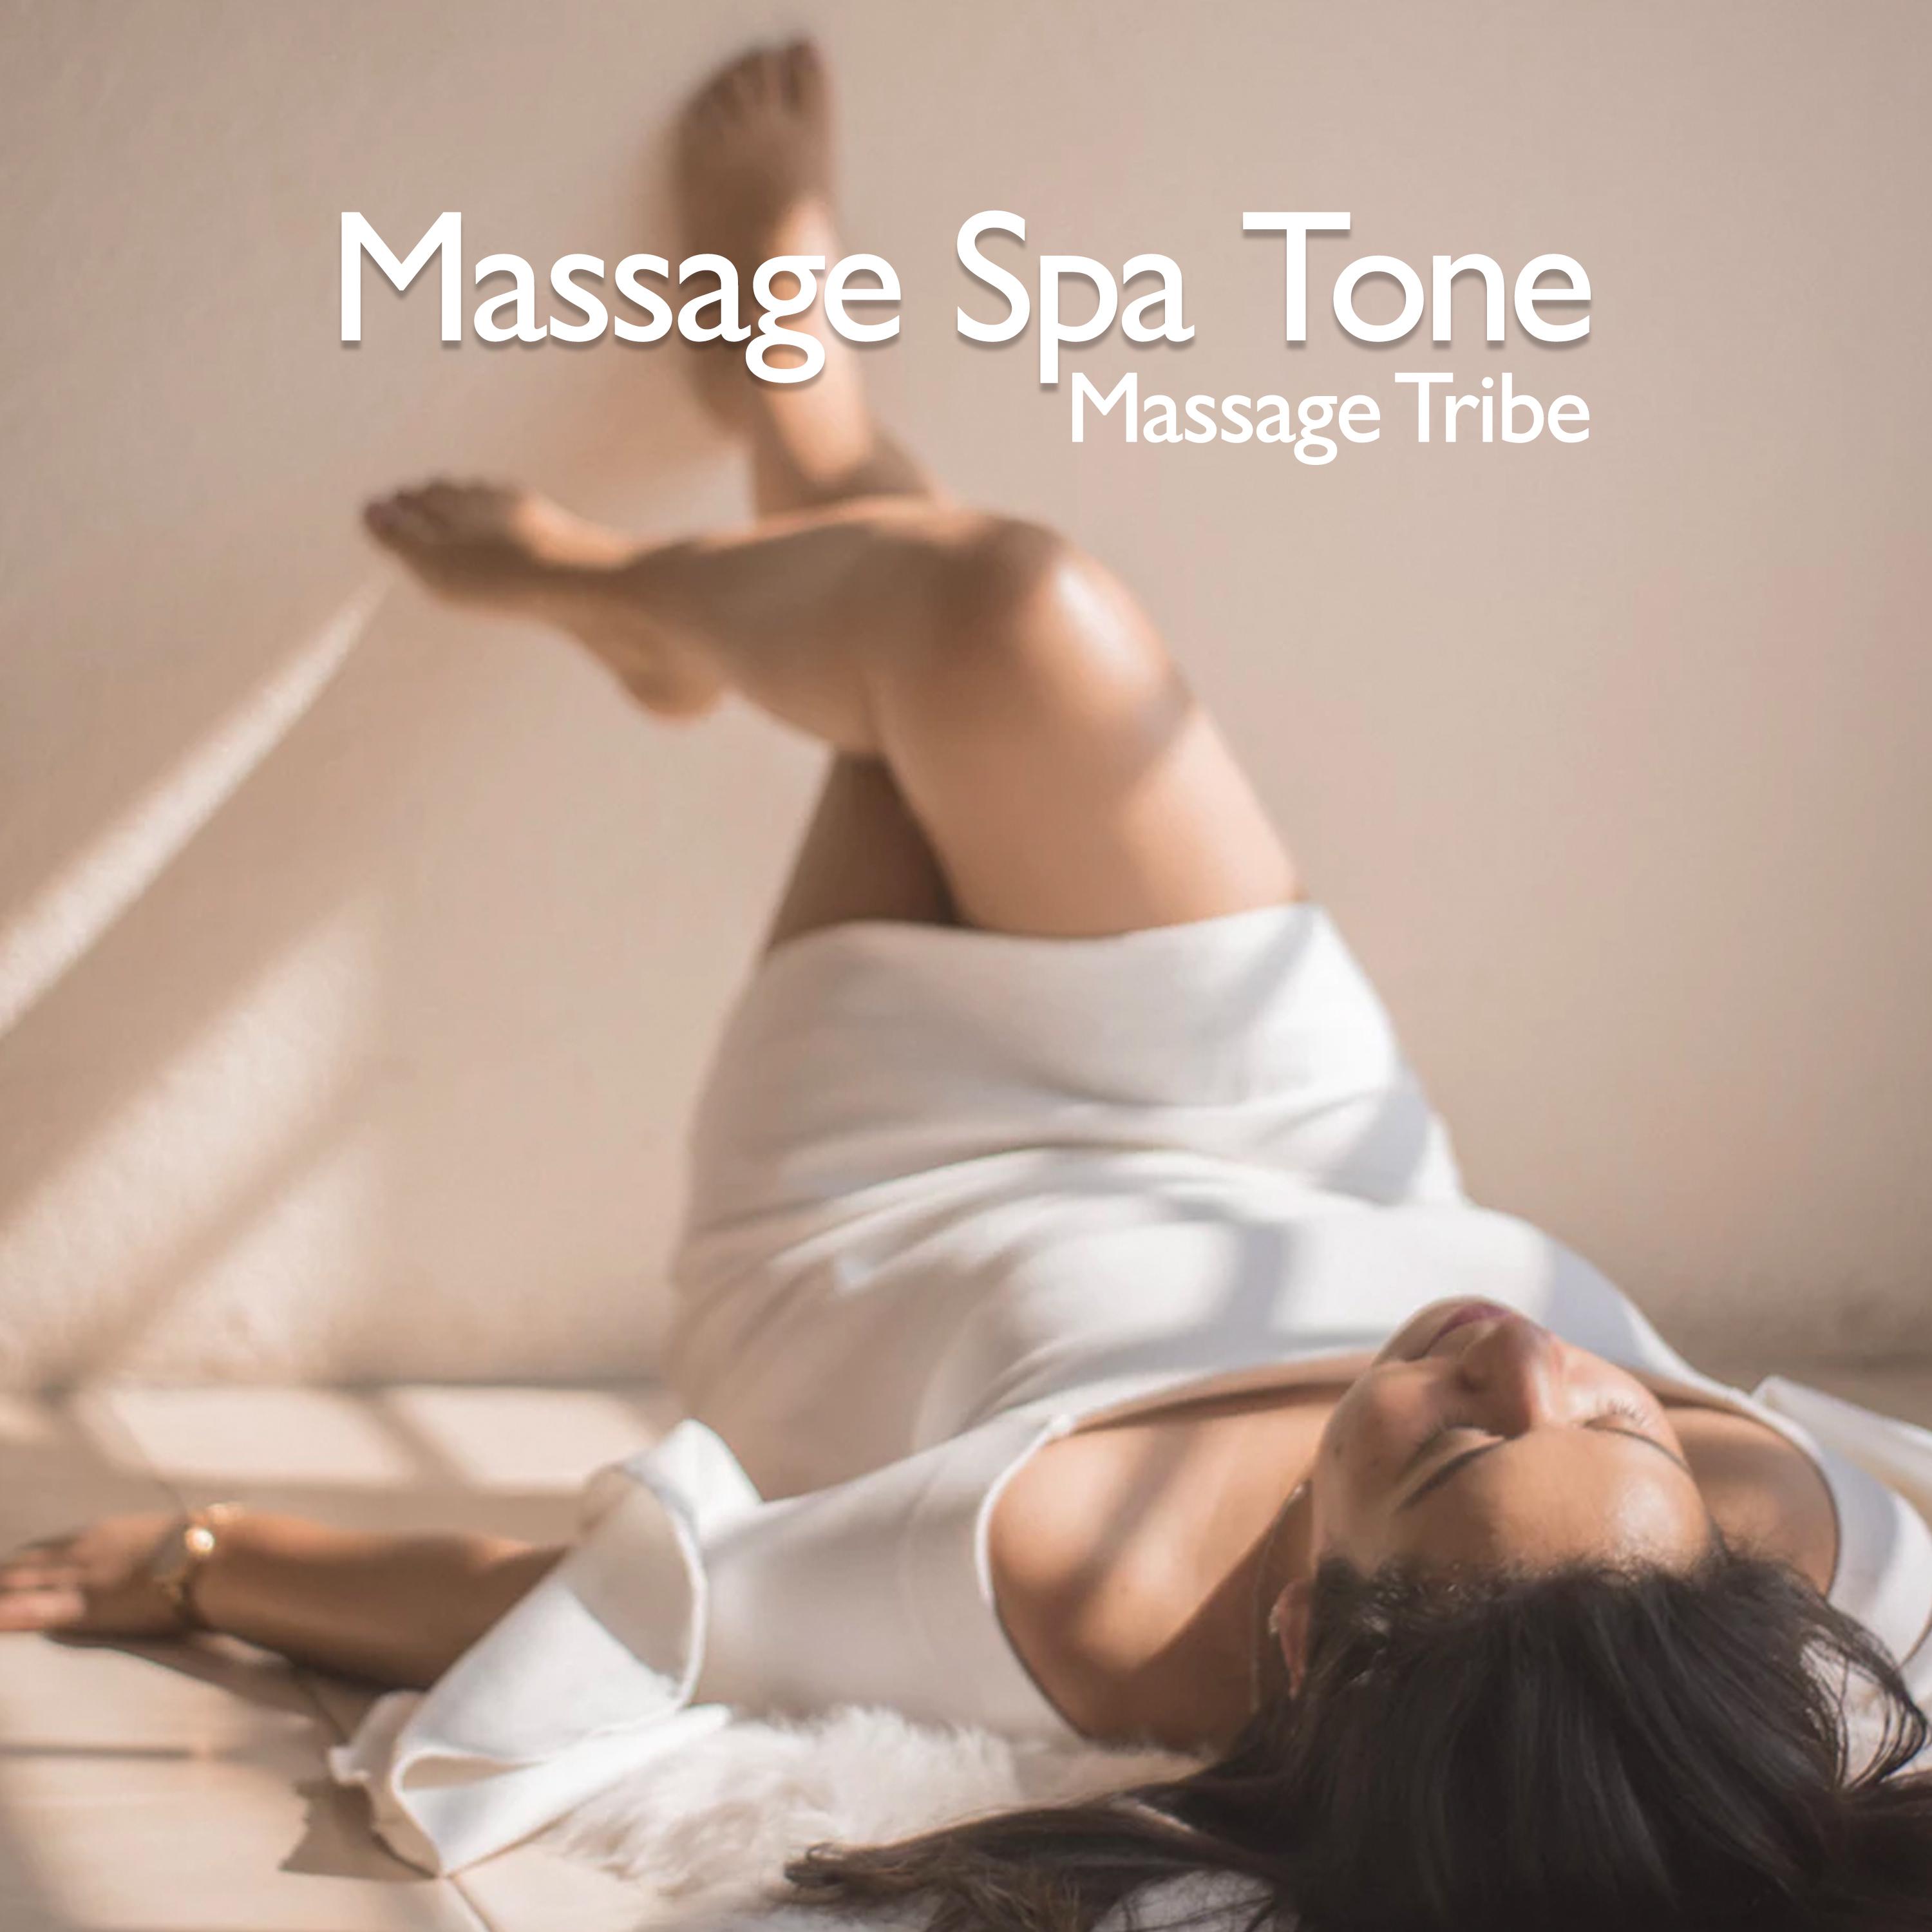 Massage Spa Tone